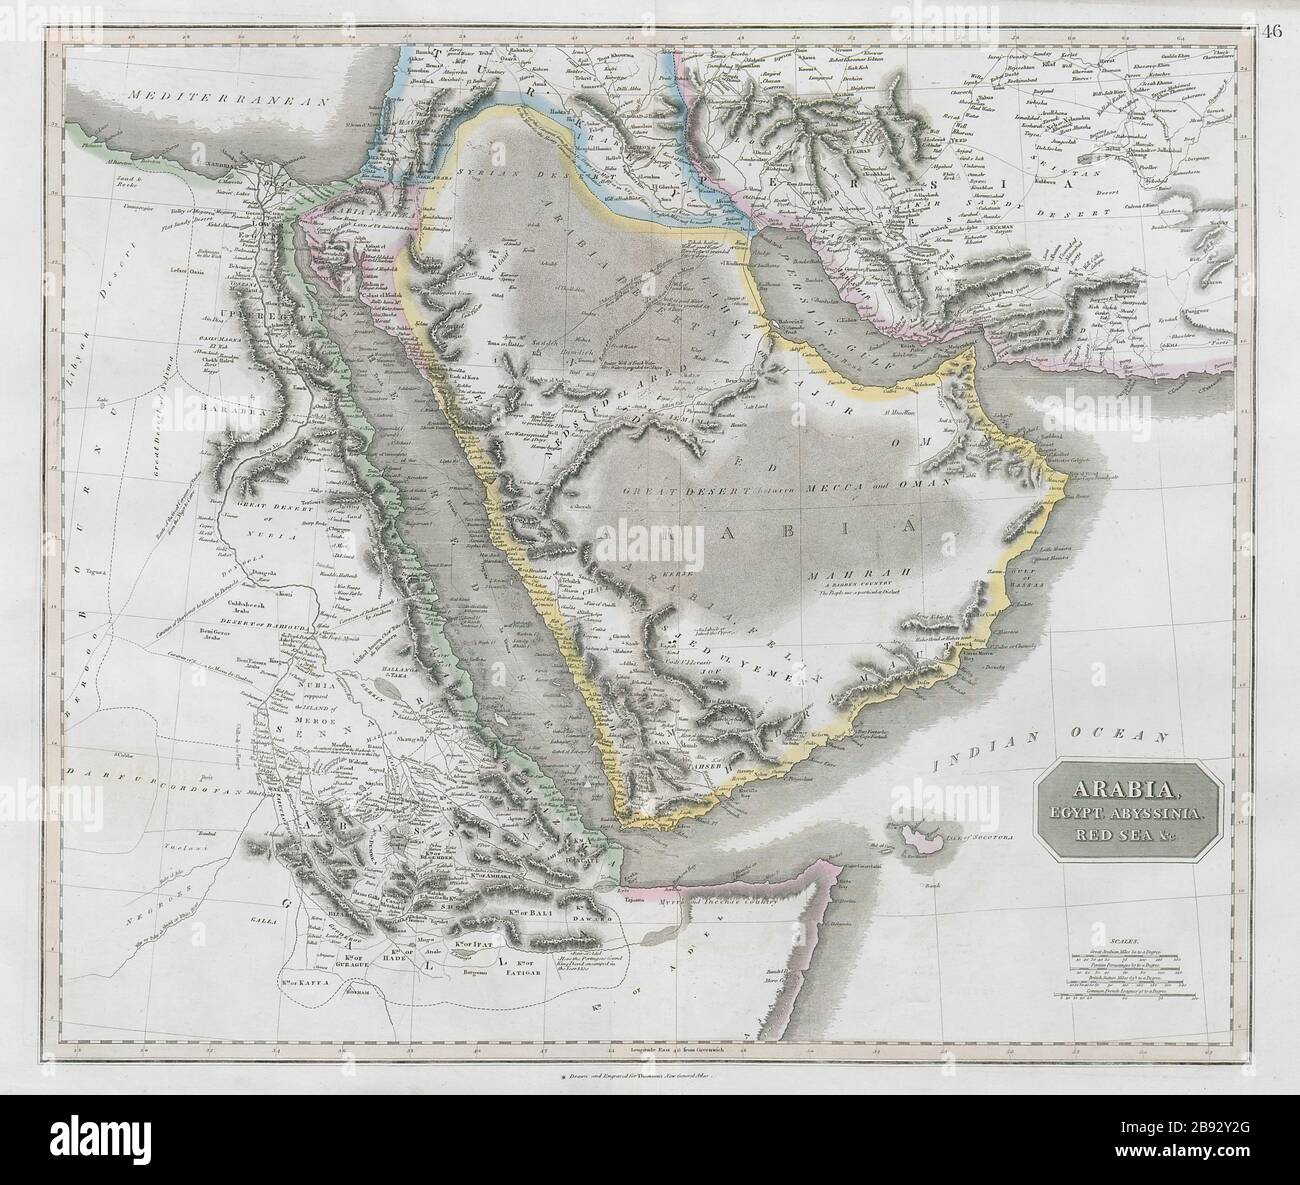 Arabia, Egypt, Abyssinia, Red Sea. Zara river (Dubai Creek). THOMSON 1830  map Stock Photo - Alamy